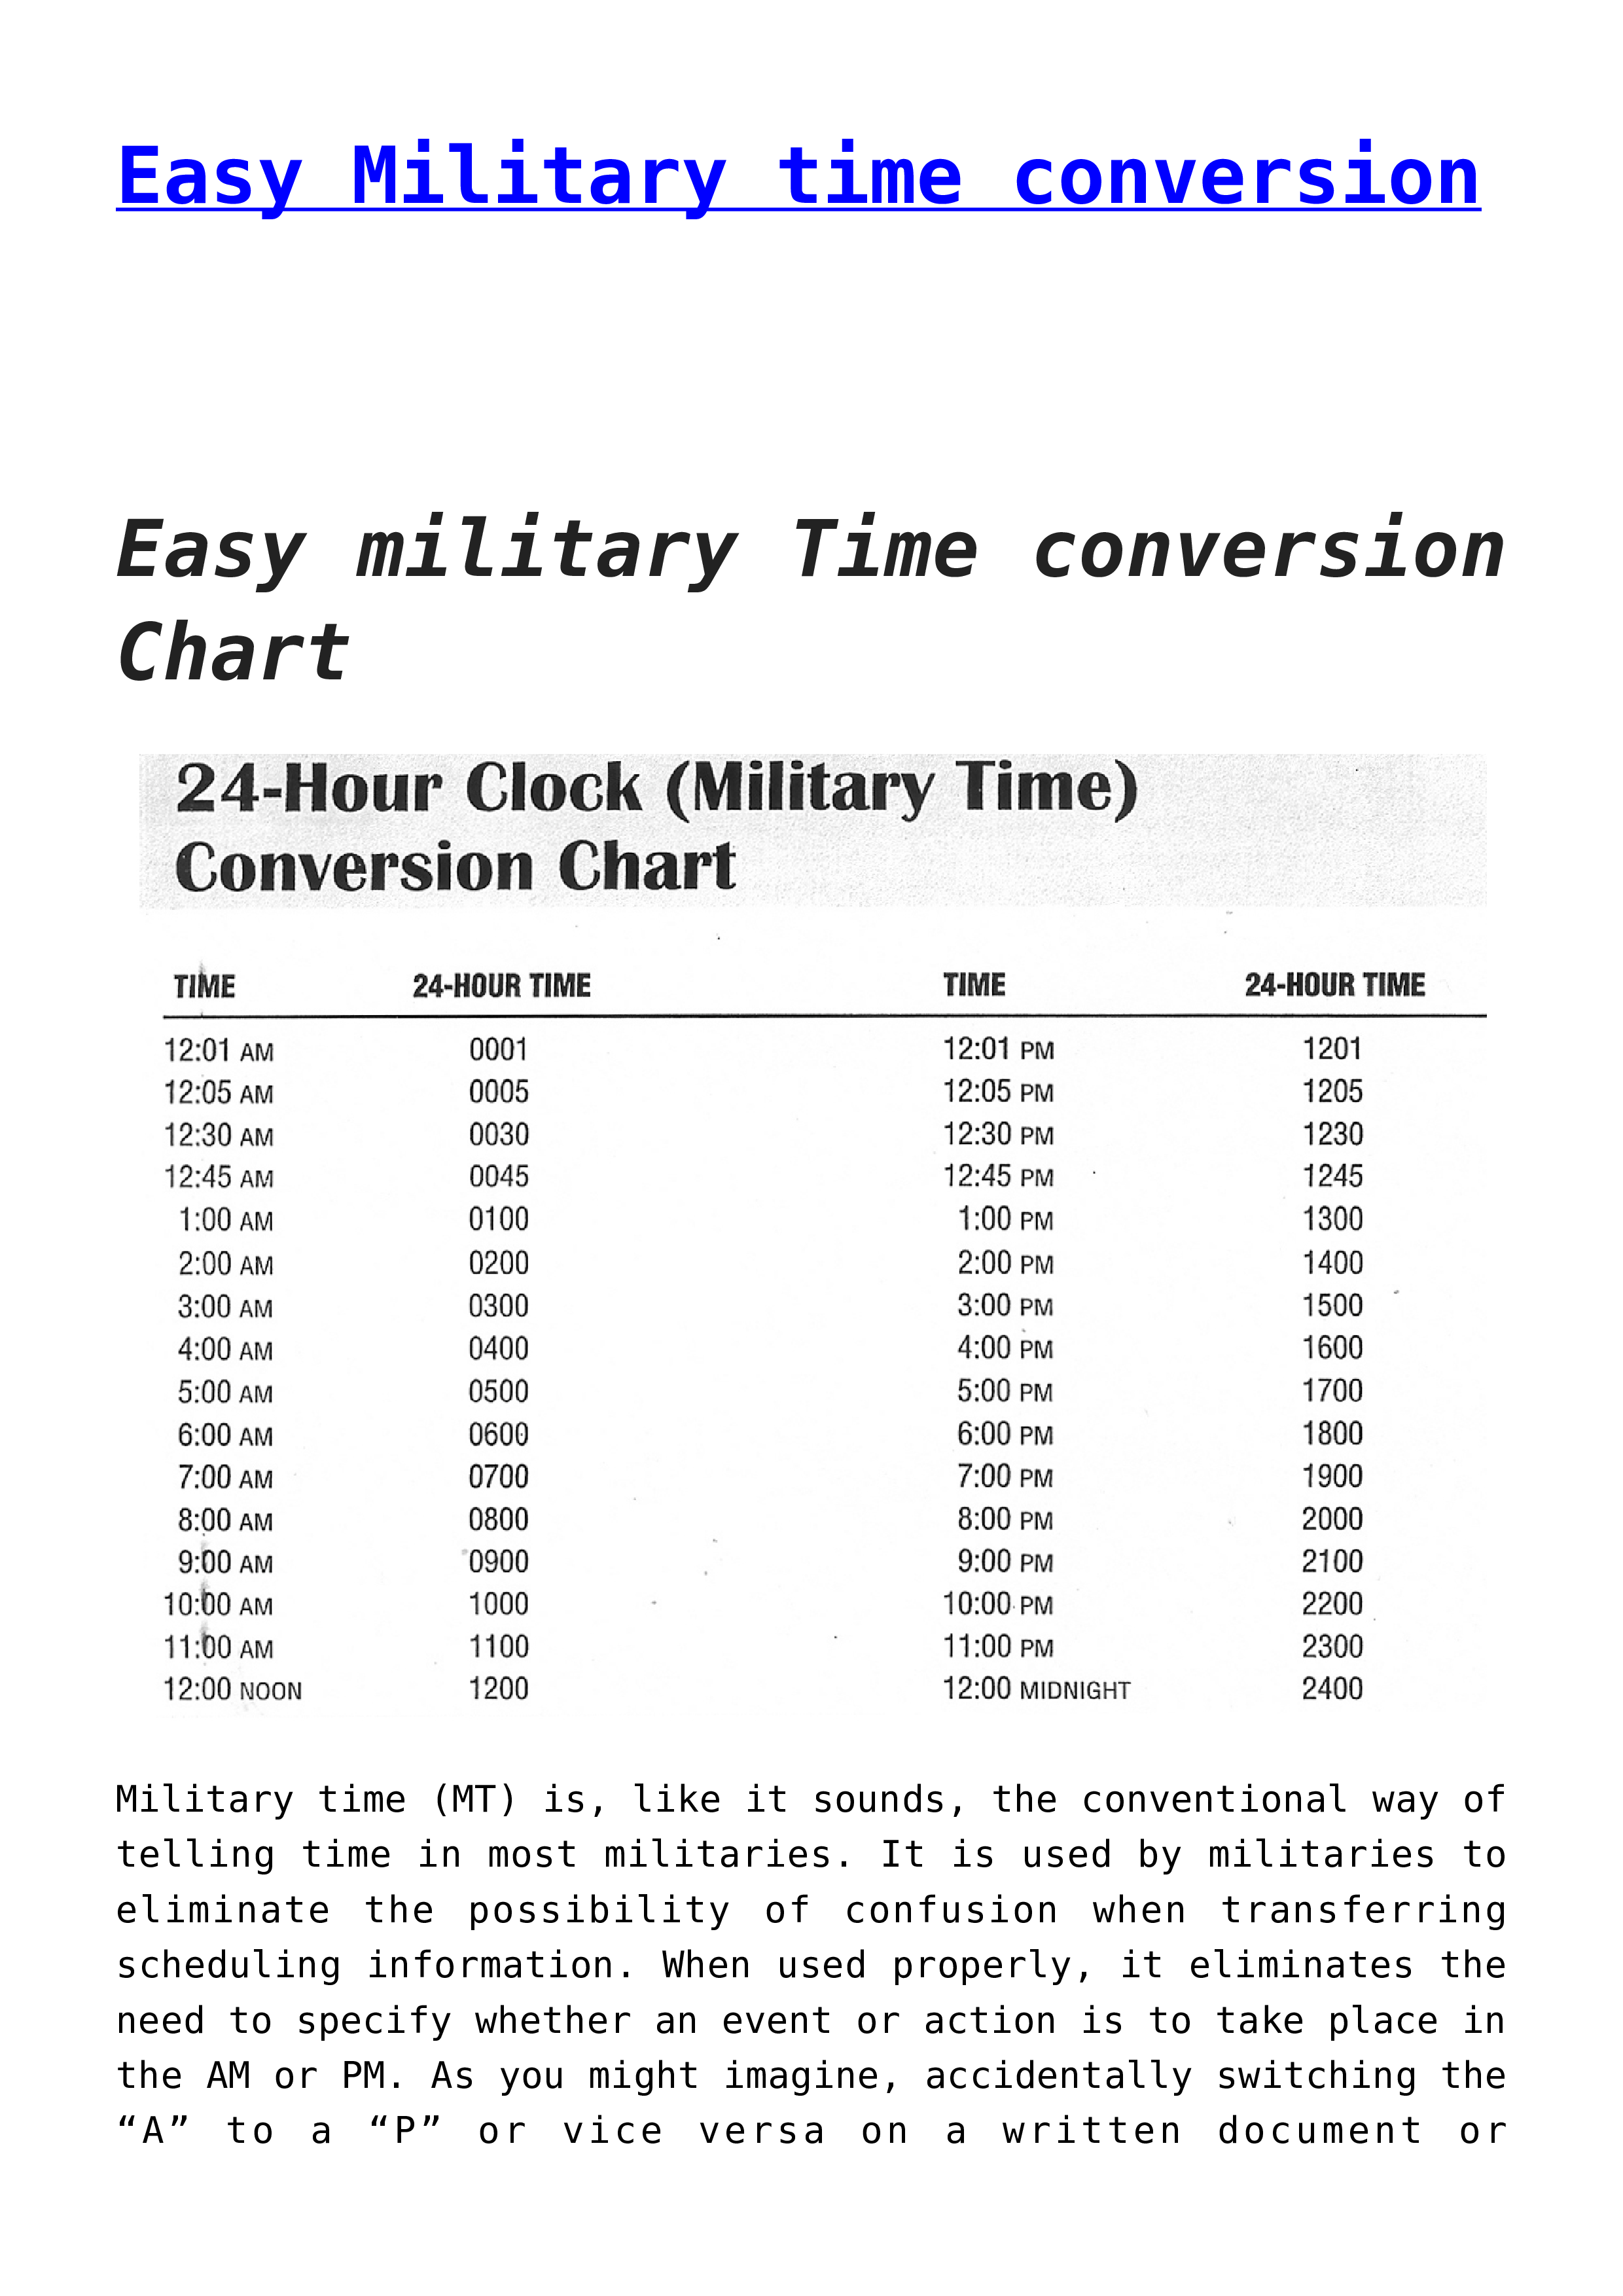 easy military time conversion chart plantilla imagen principal